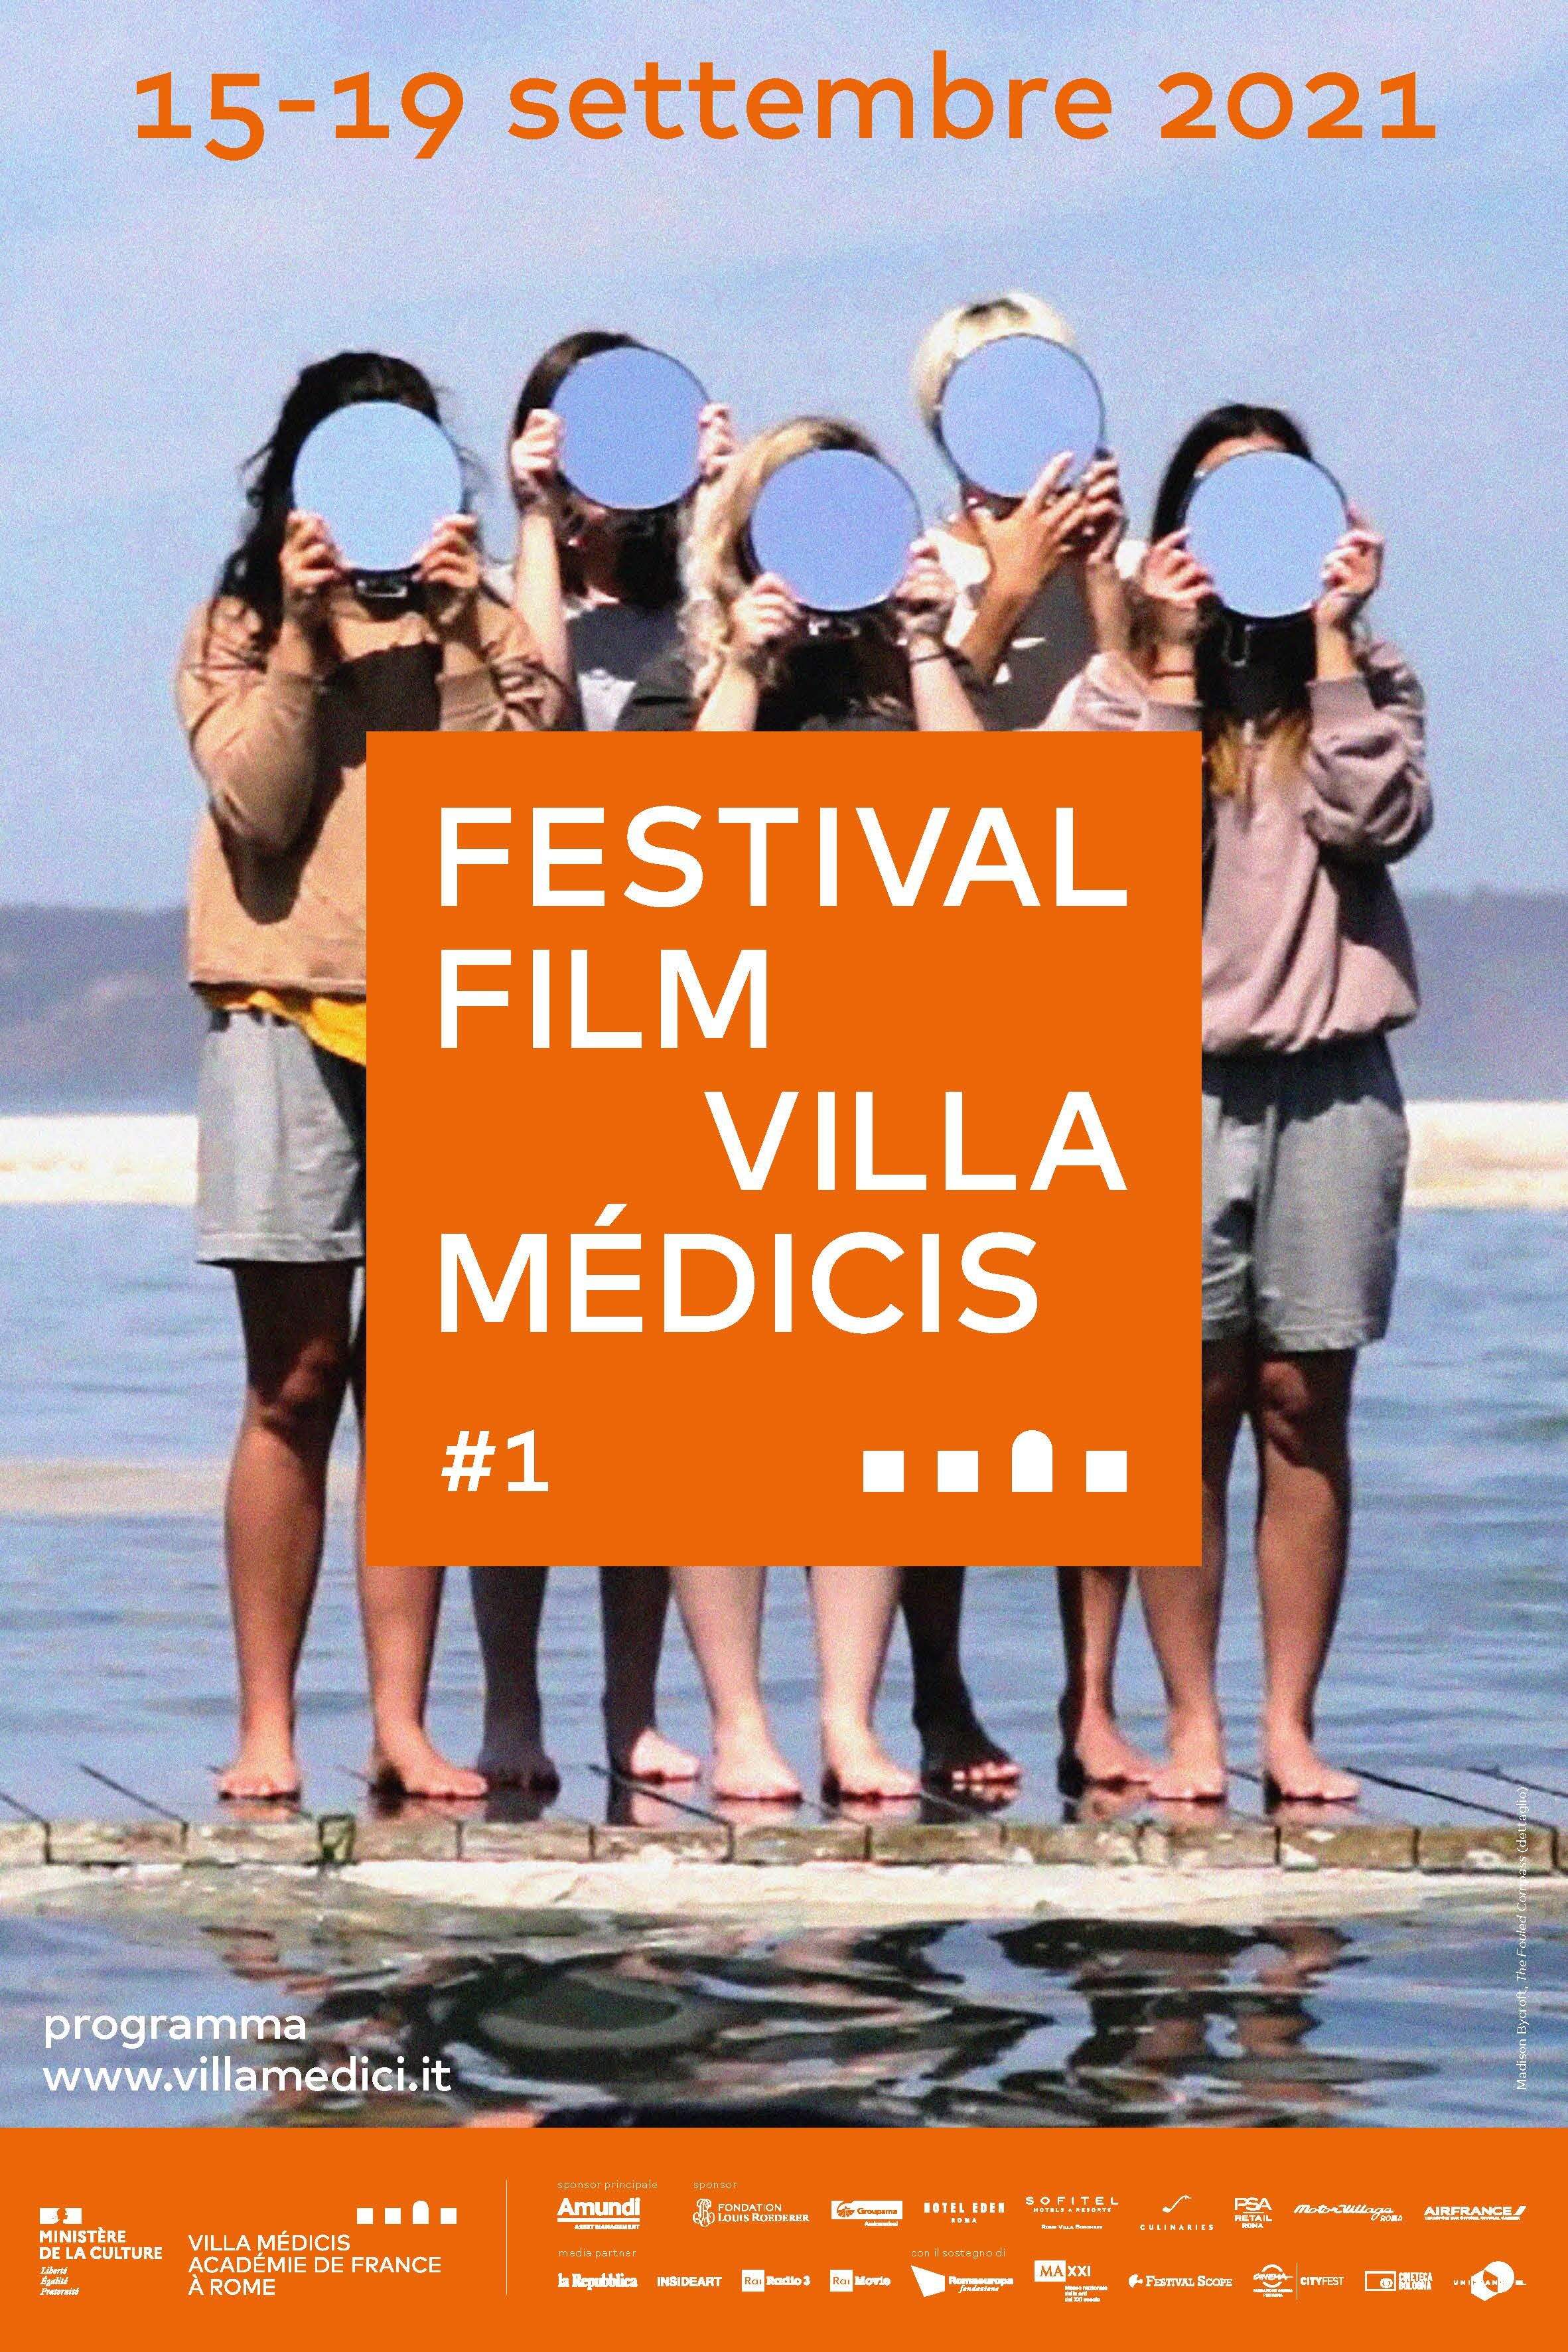 Festival di Villa Medici, i premi ai filmmaker di Hong Kong e al boliviano Kiro Russo